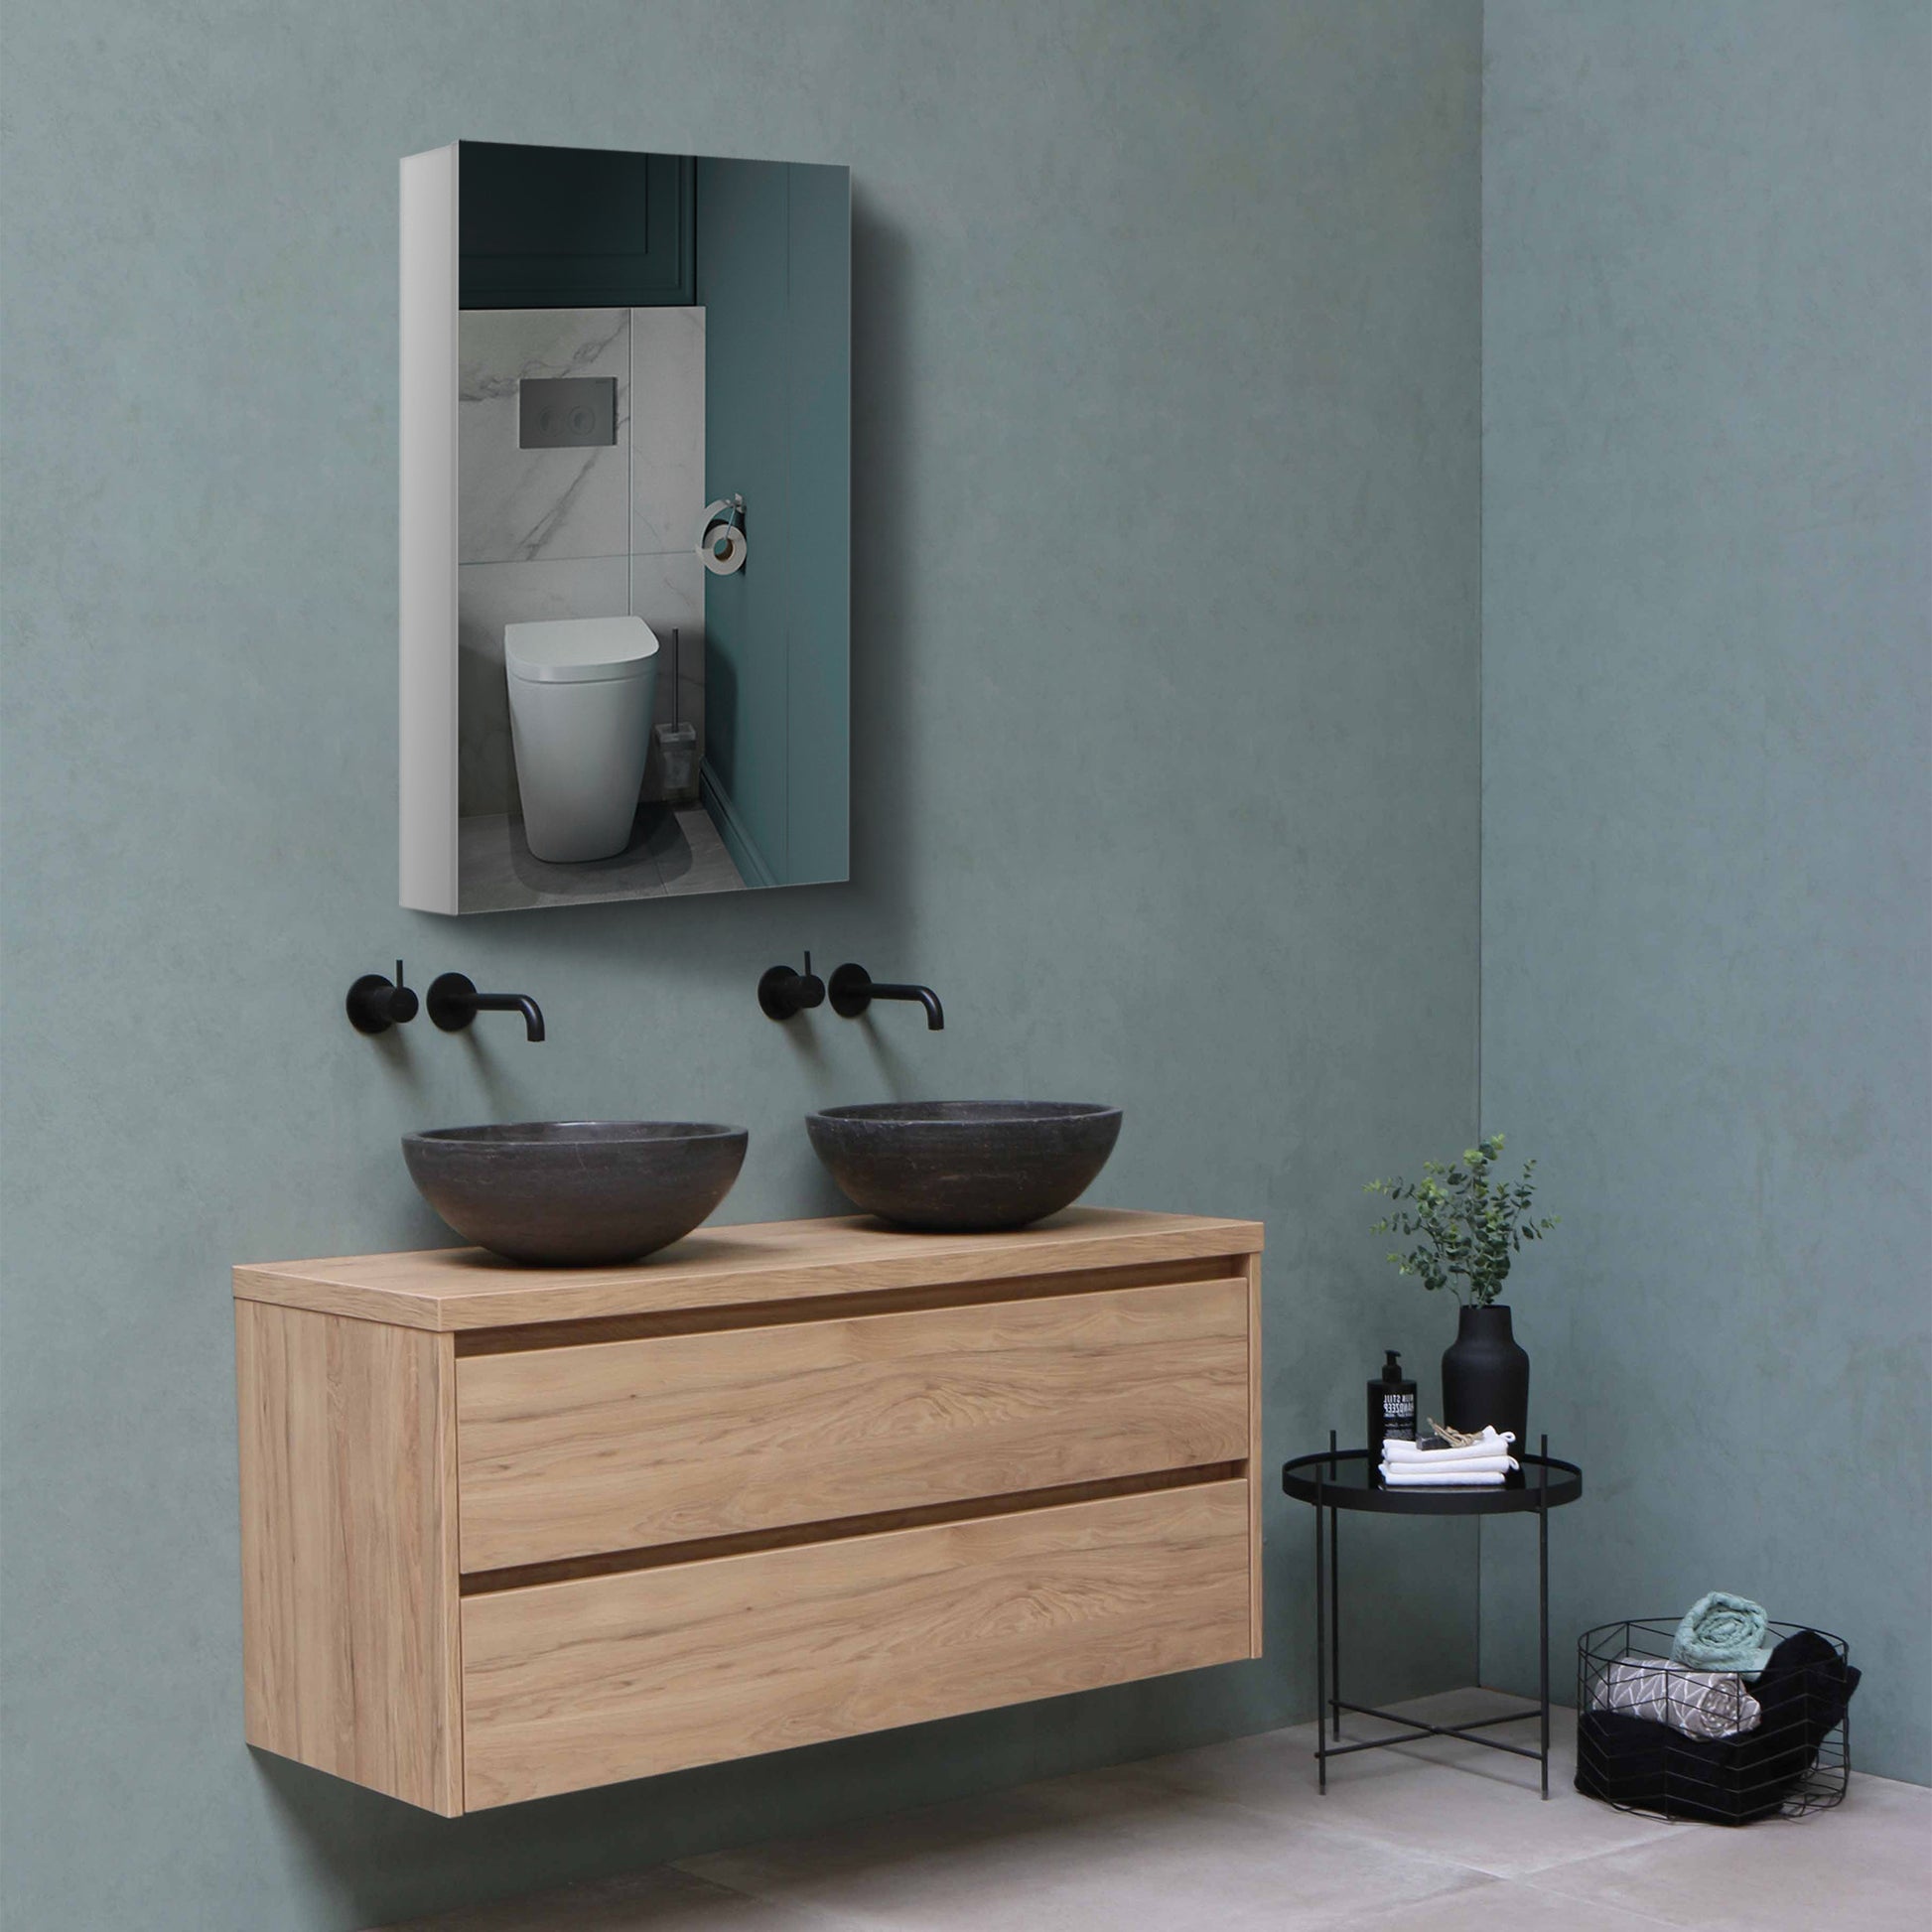 15" W x 26" H Single Door Bathroom Medicine Cabinet white-engineered wood